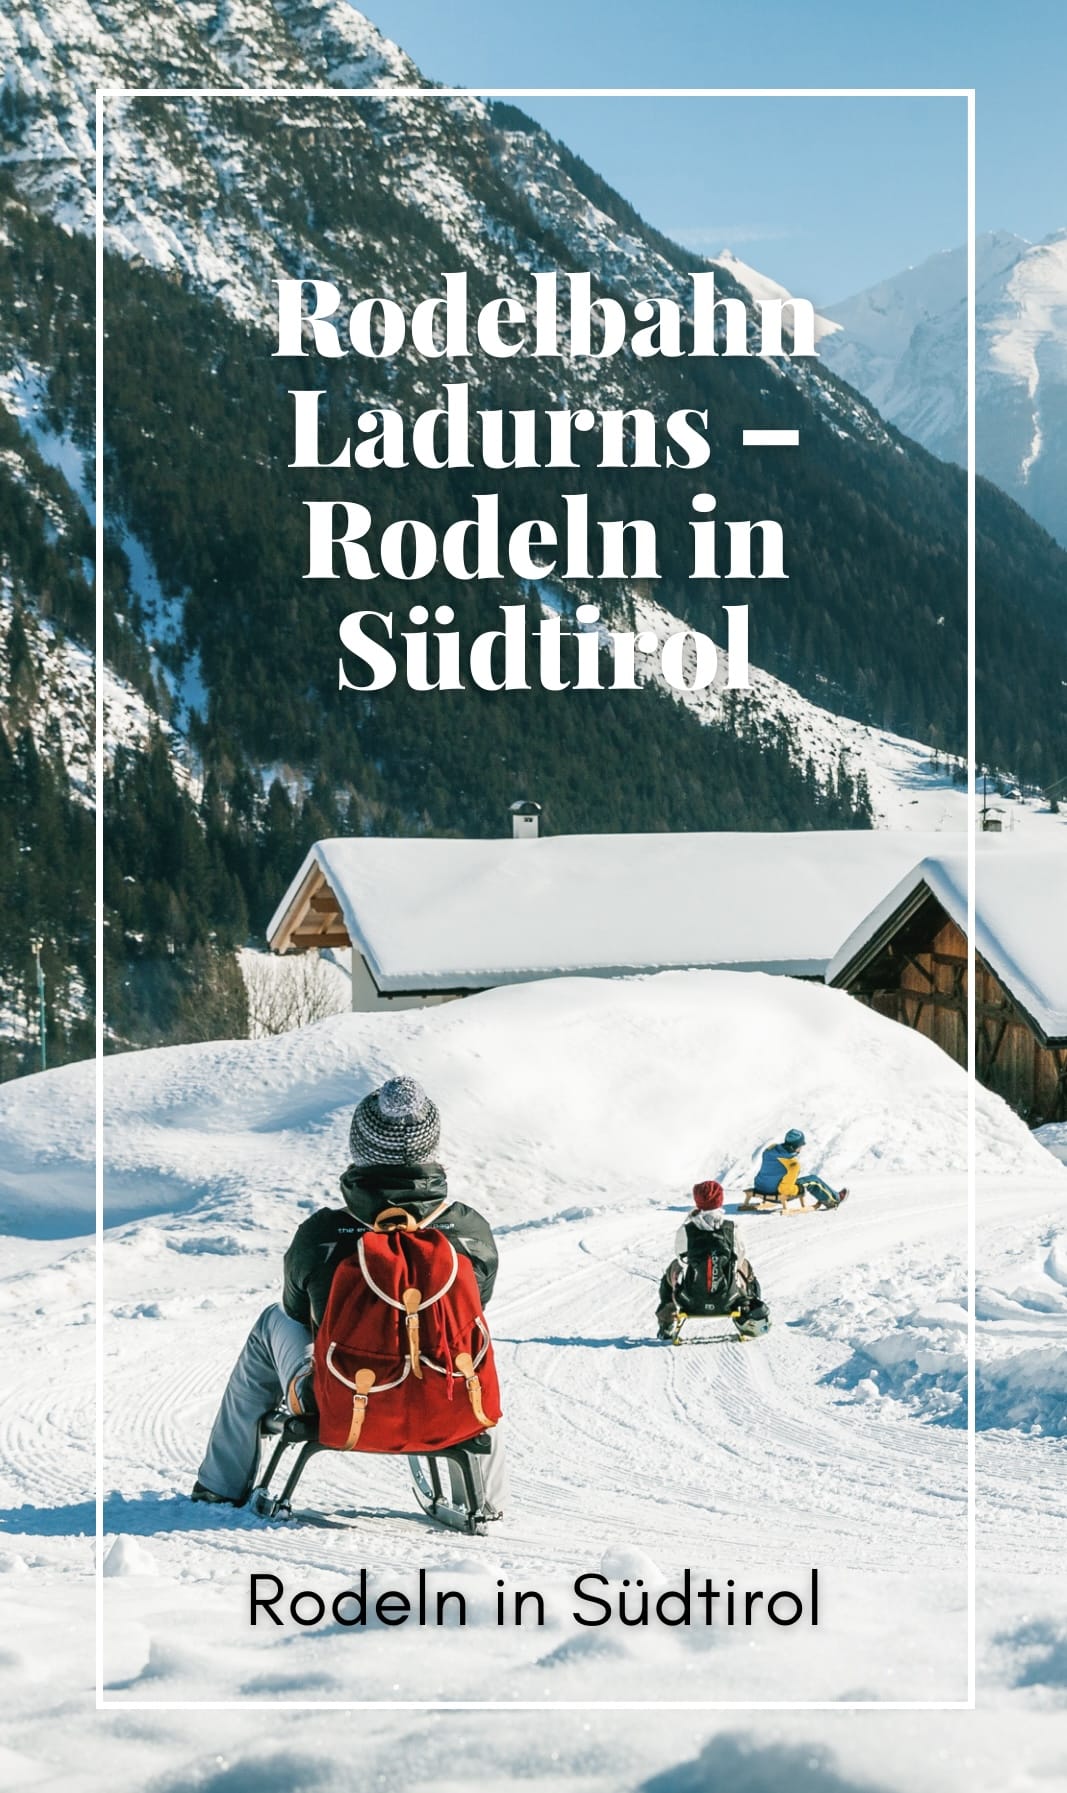 Rodelbahn Ladurns – Rodeln in Südtirol